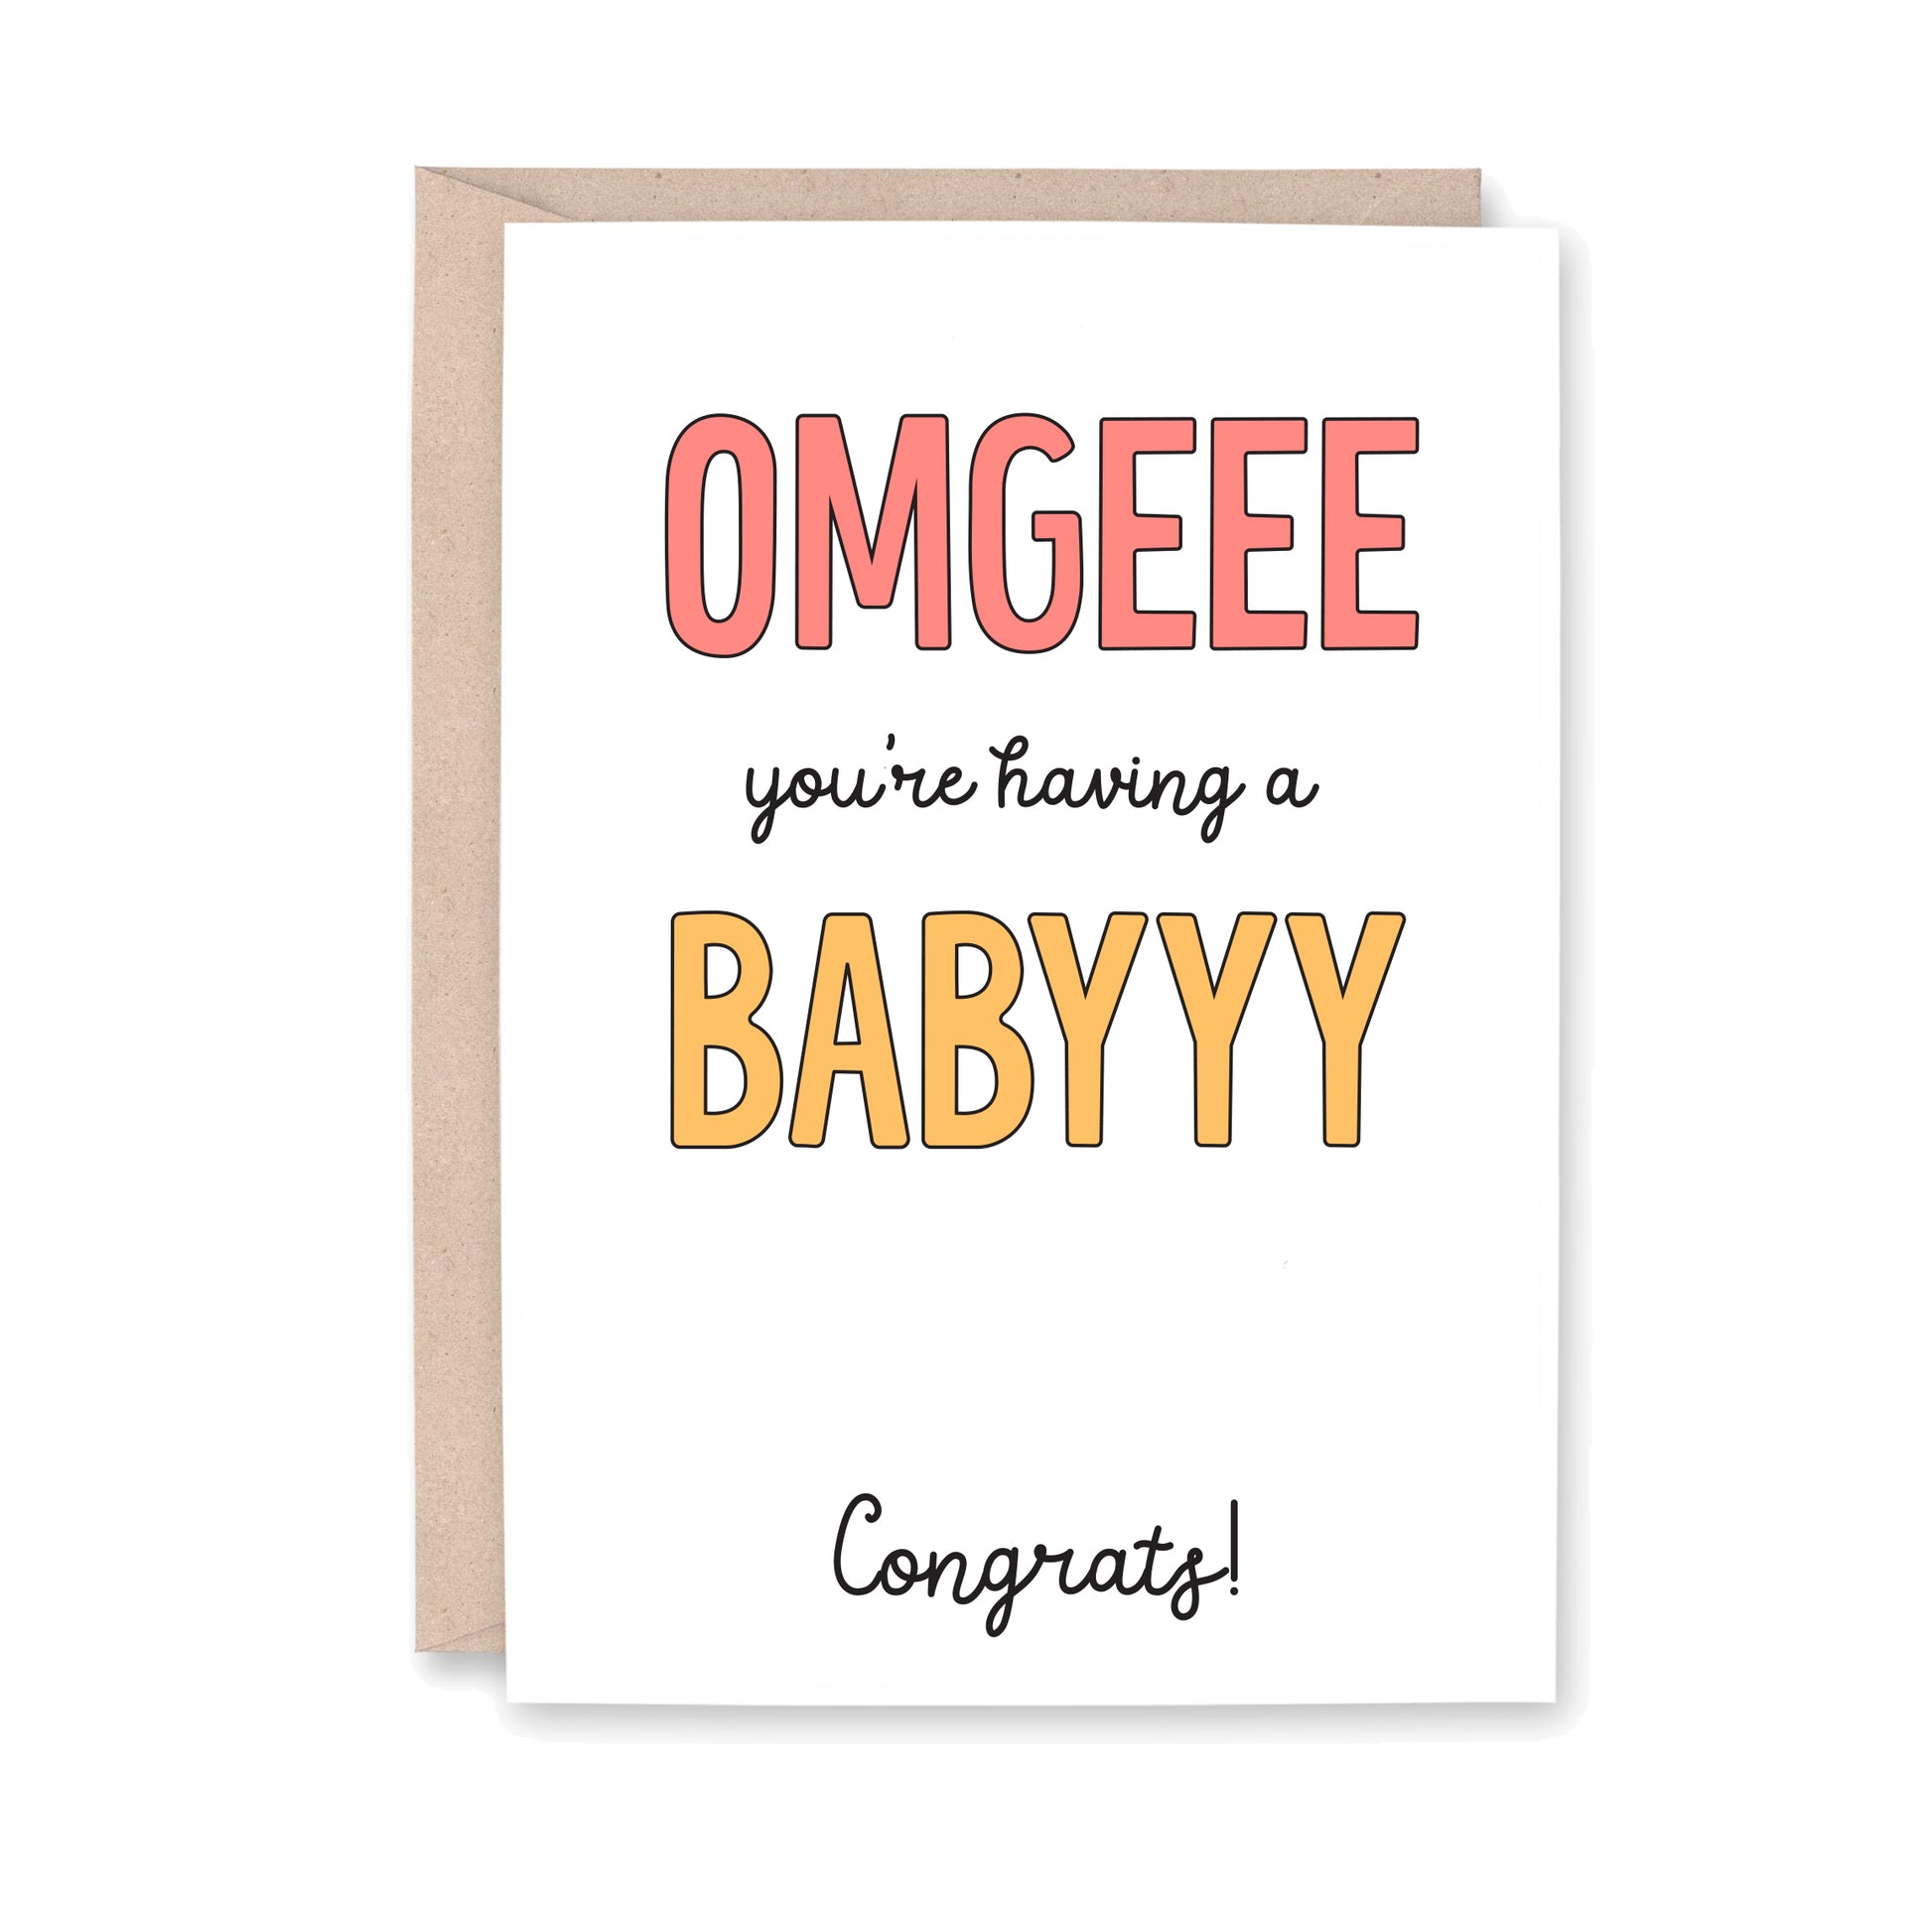 OMGEEE you're having a BABYYY Congrats!